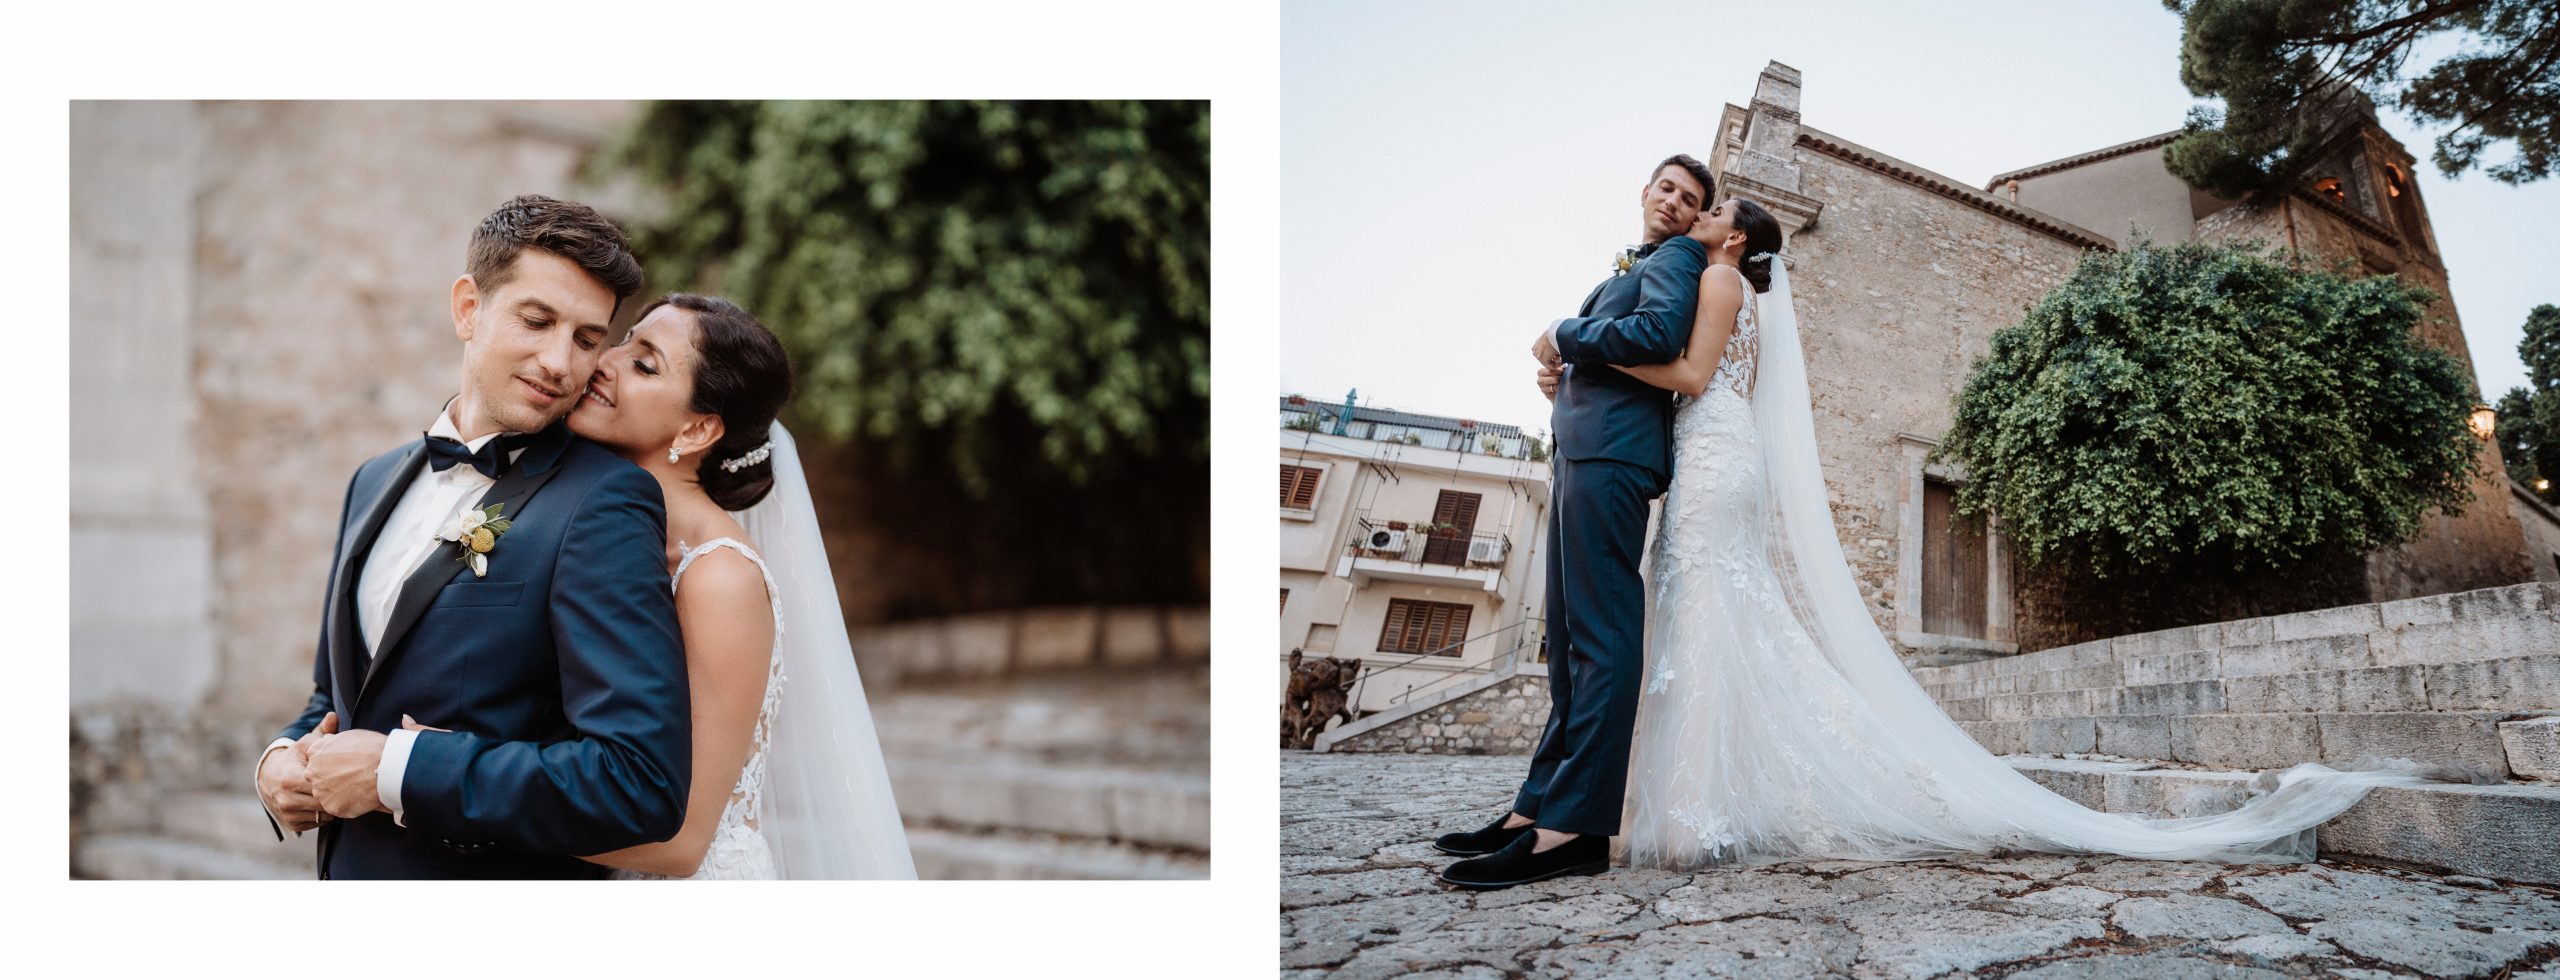 Jan e Melania 40 scaled - fotografo matrimonio catania